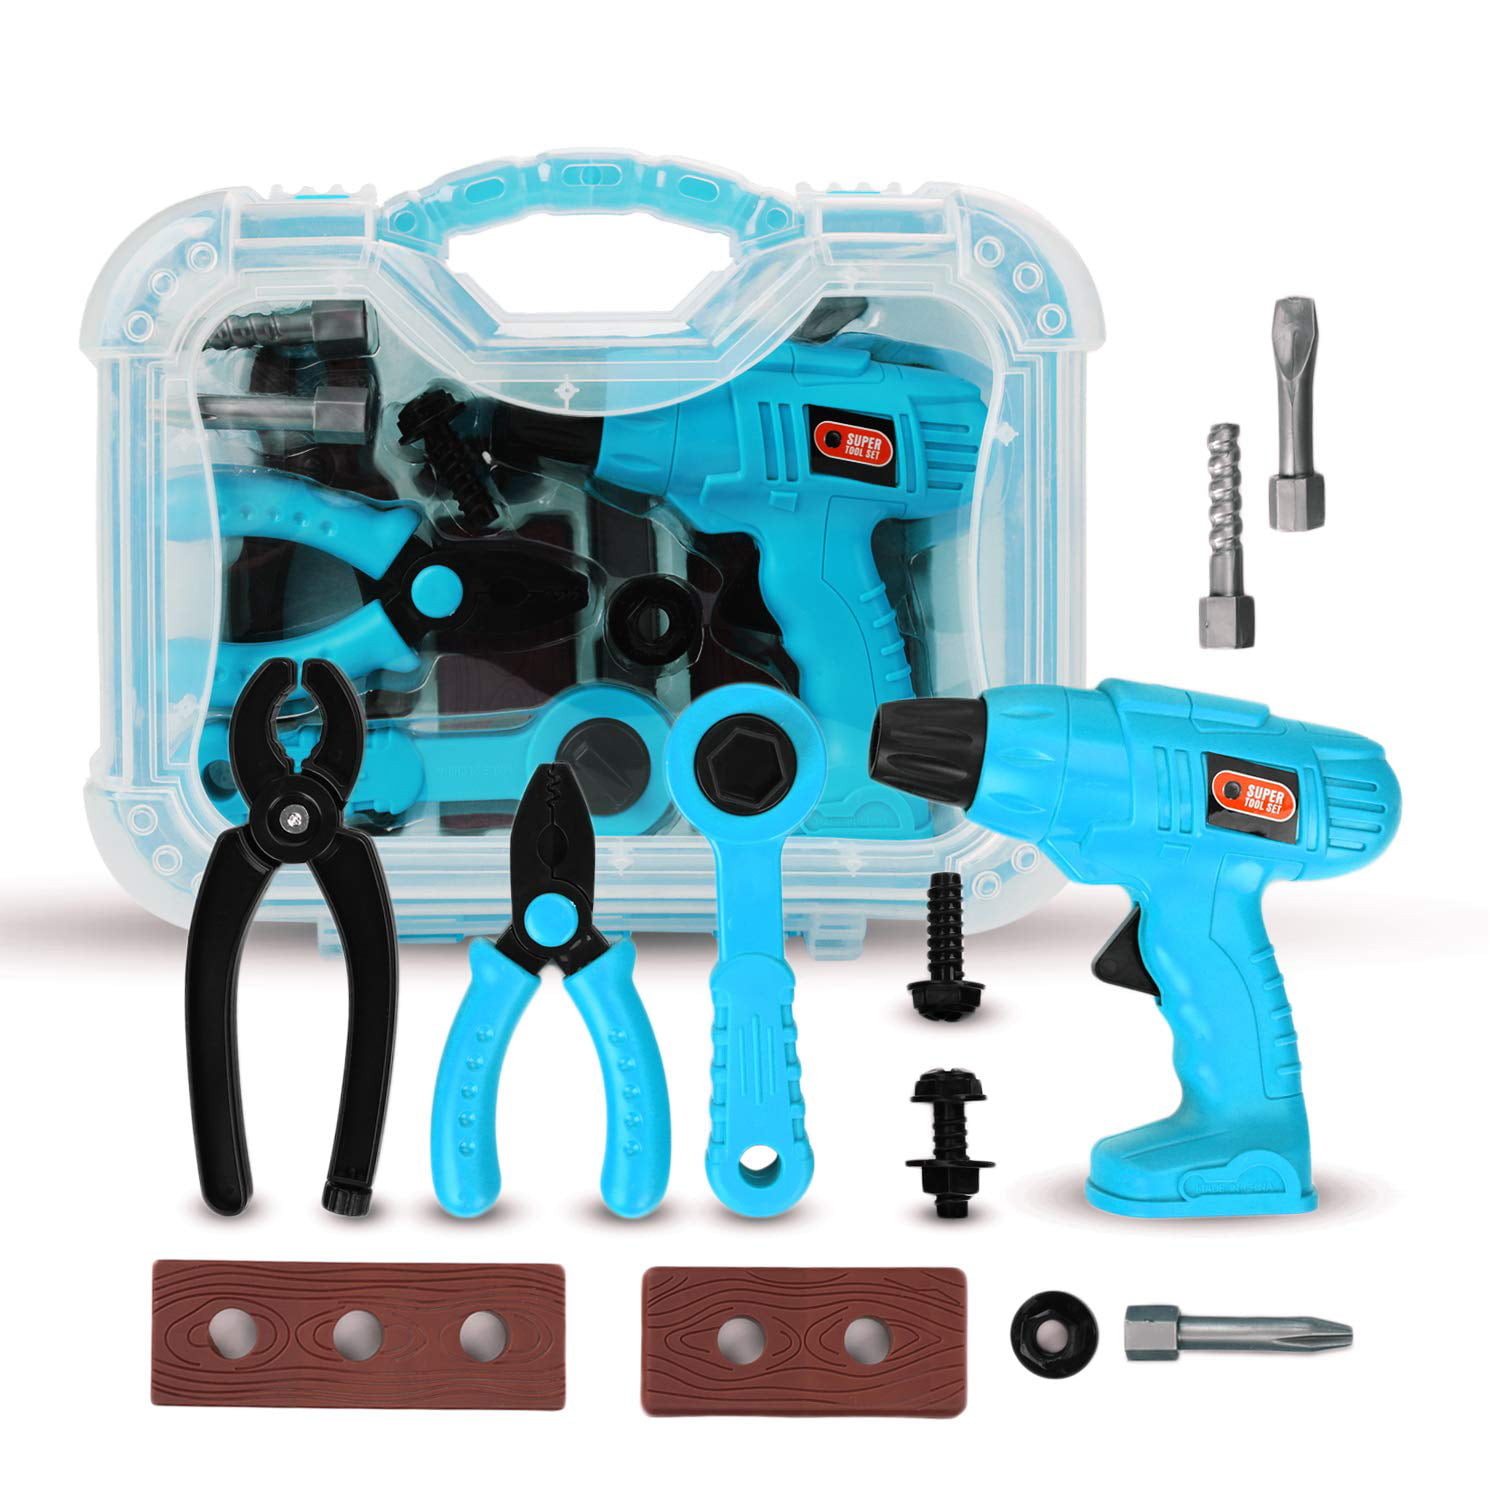 Boy Kids Toy Building Carpenter Repair Tool Plastic Hammer Spanner Axe Plier Kit 